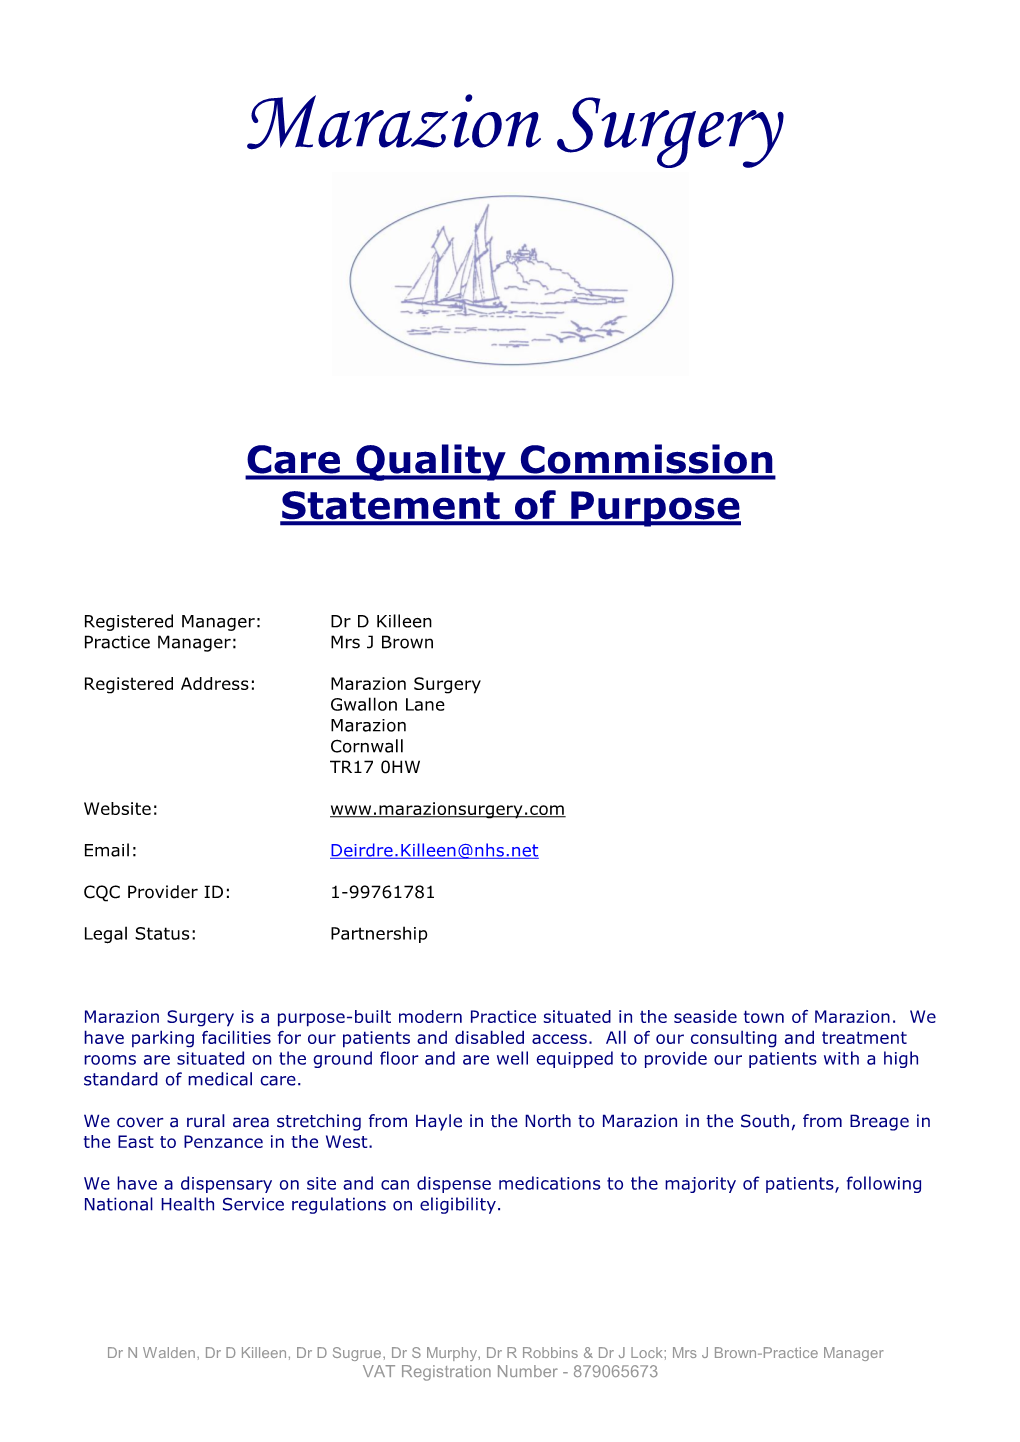 Marazion Surgery Care Quality Commission Statement of Purpose